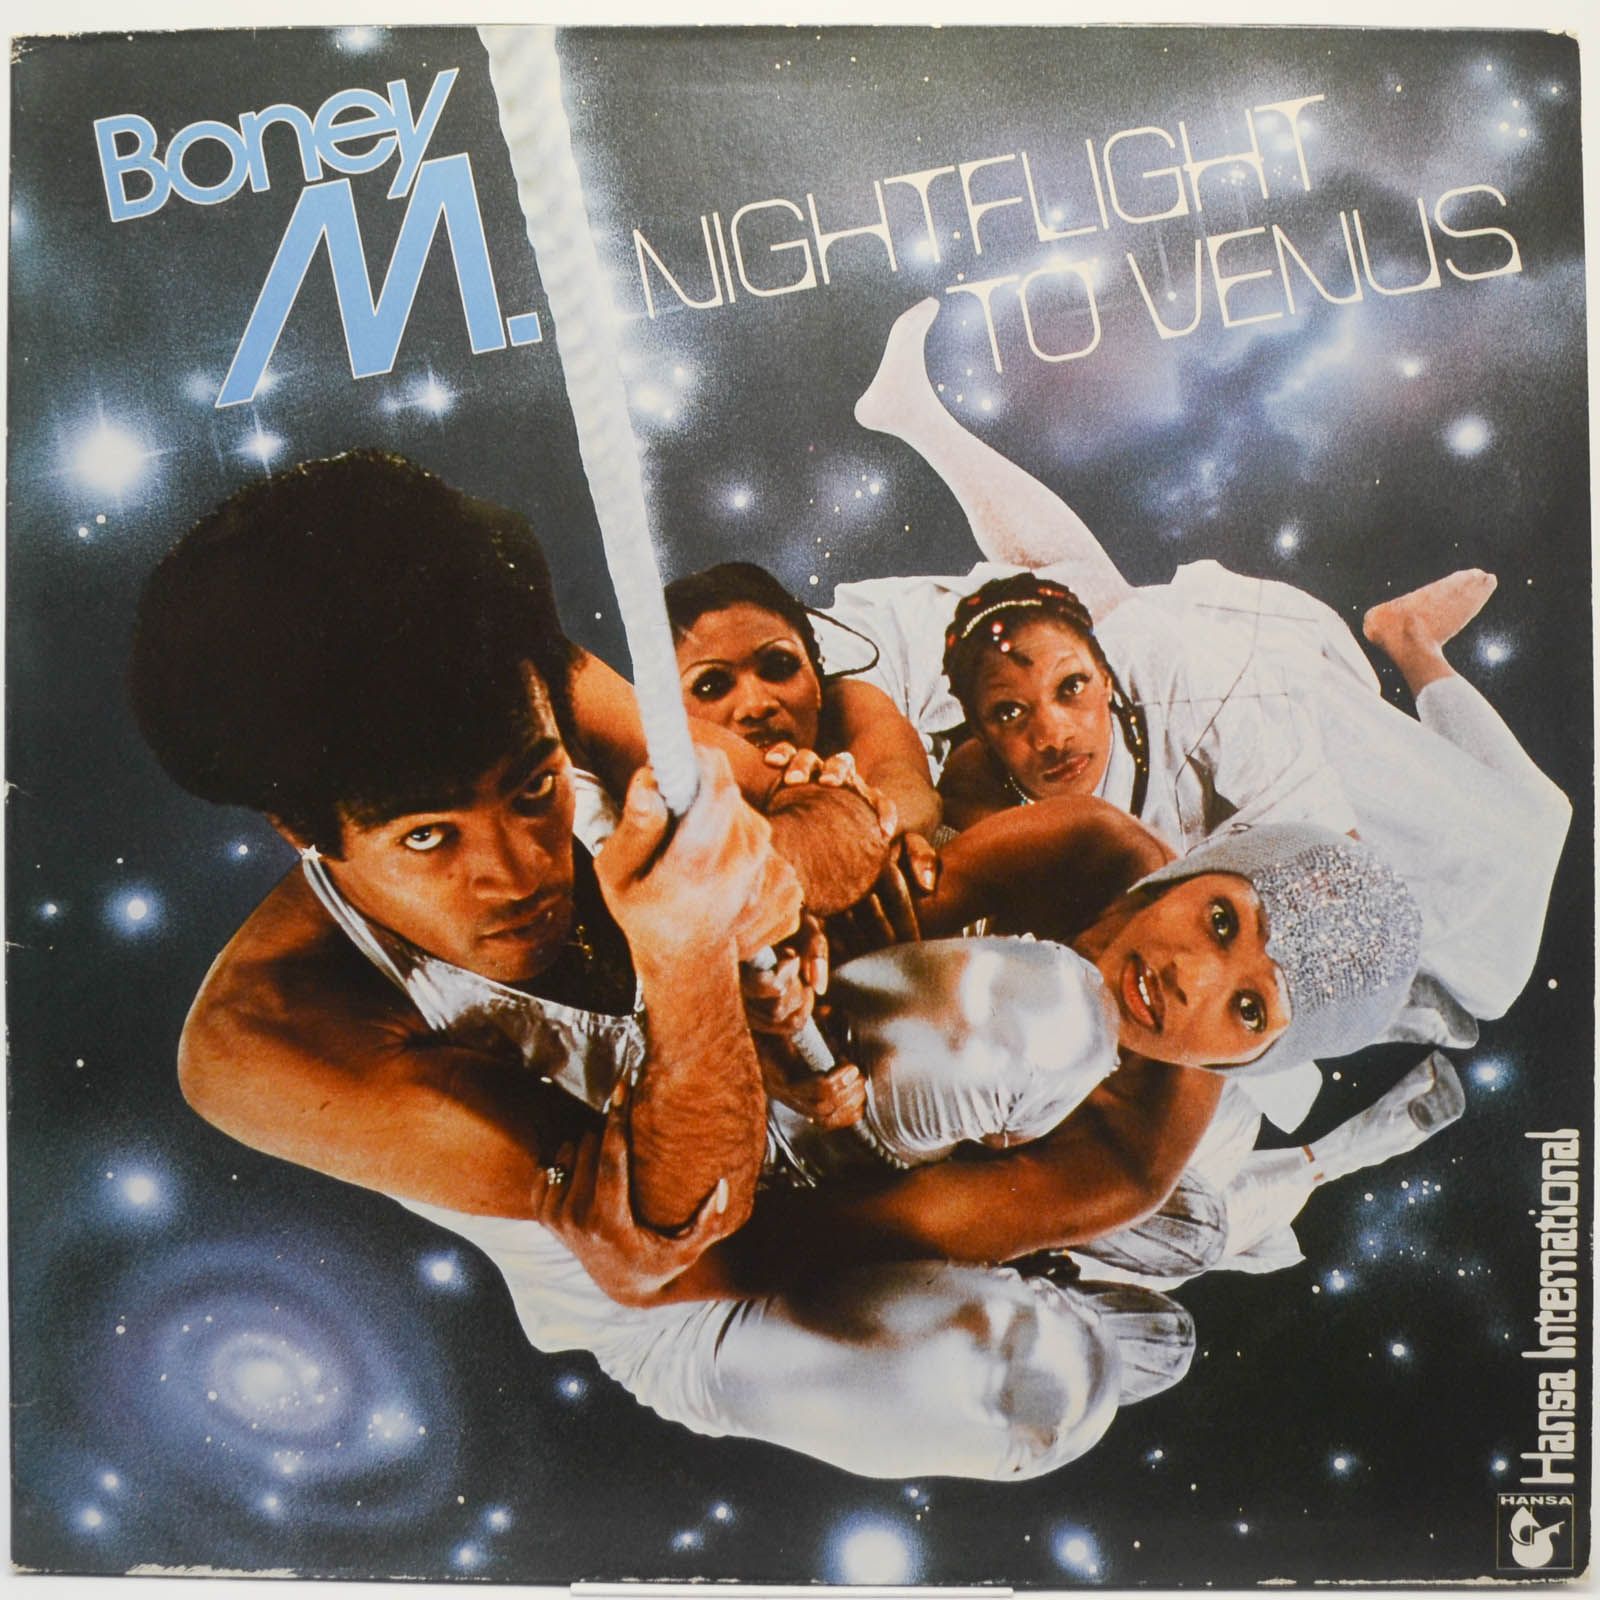 Boney m venus. Boney m Nightflight to Venus 1978. Boney m Sunny винил 1976. Пластинка Boney m Nightflight to Venus. Обложки виниловых пластинок Бони м.